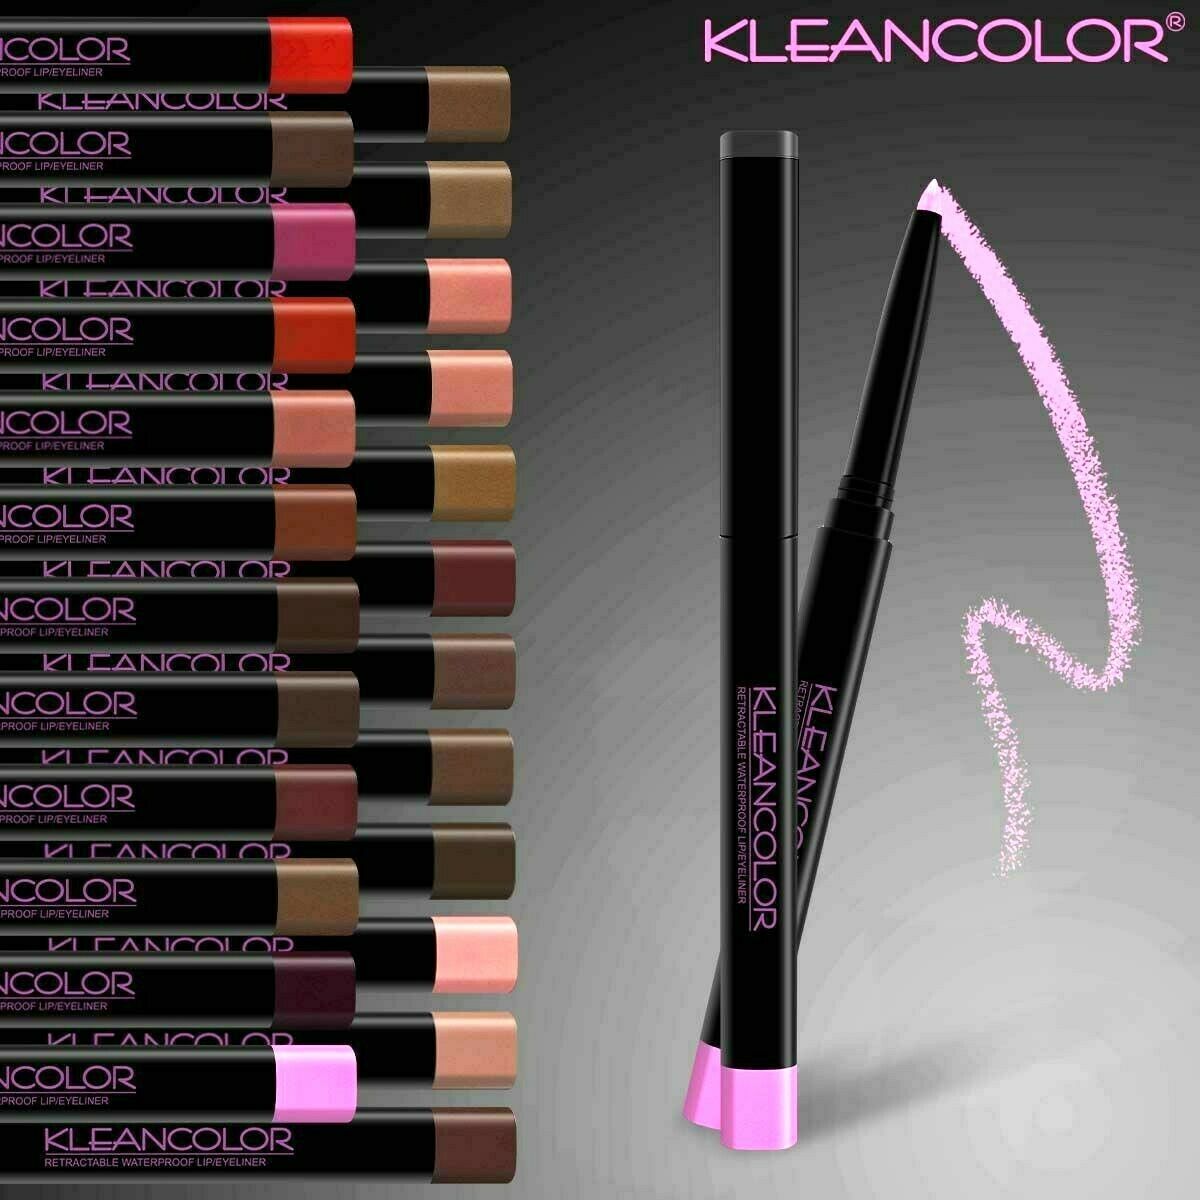 Kleancolor Retractable Lip Eye Liner Waterproof Pick From 35 Colors B2get1free